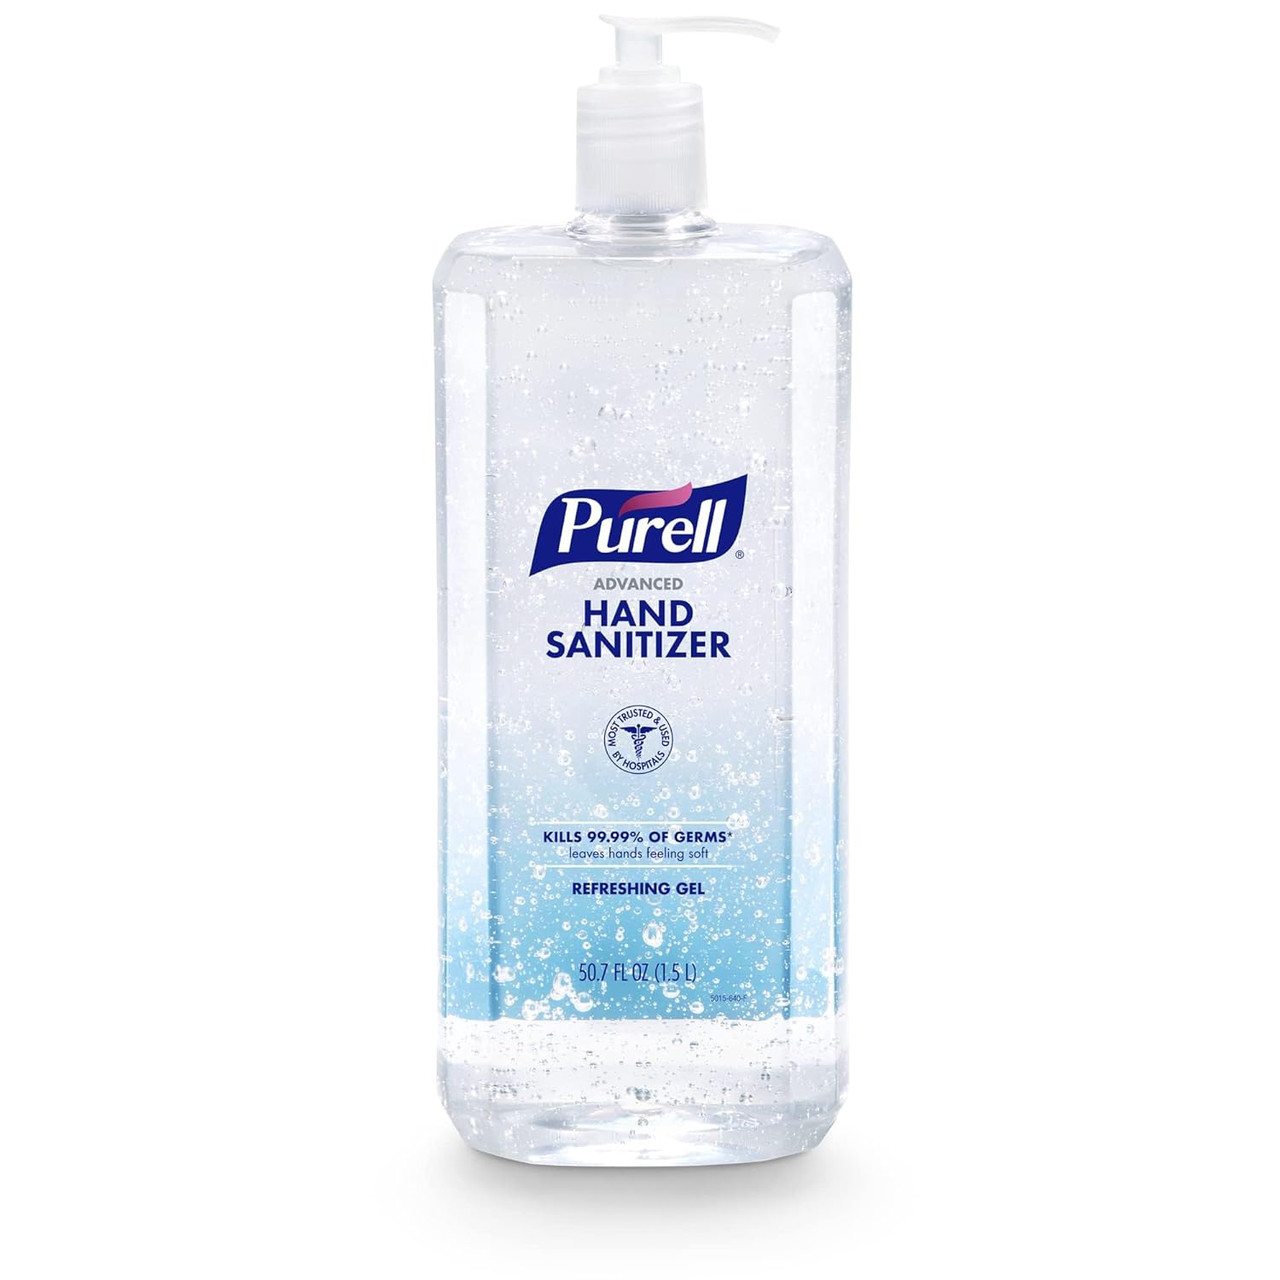 PURELL Advanced Hand Sanitizer, Refreshing Gel, 1.5L Pump Bottle, Clear